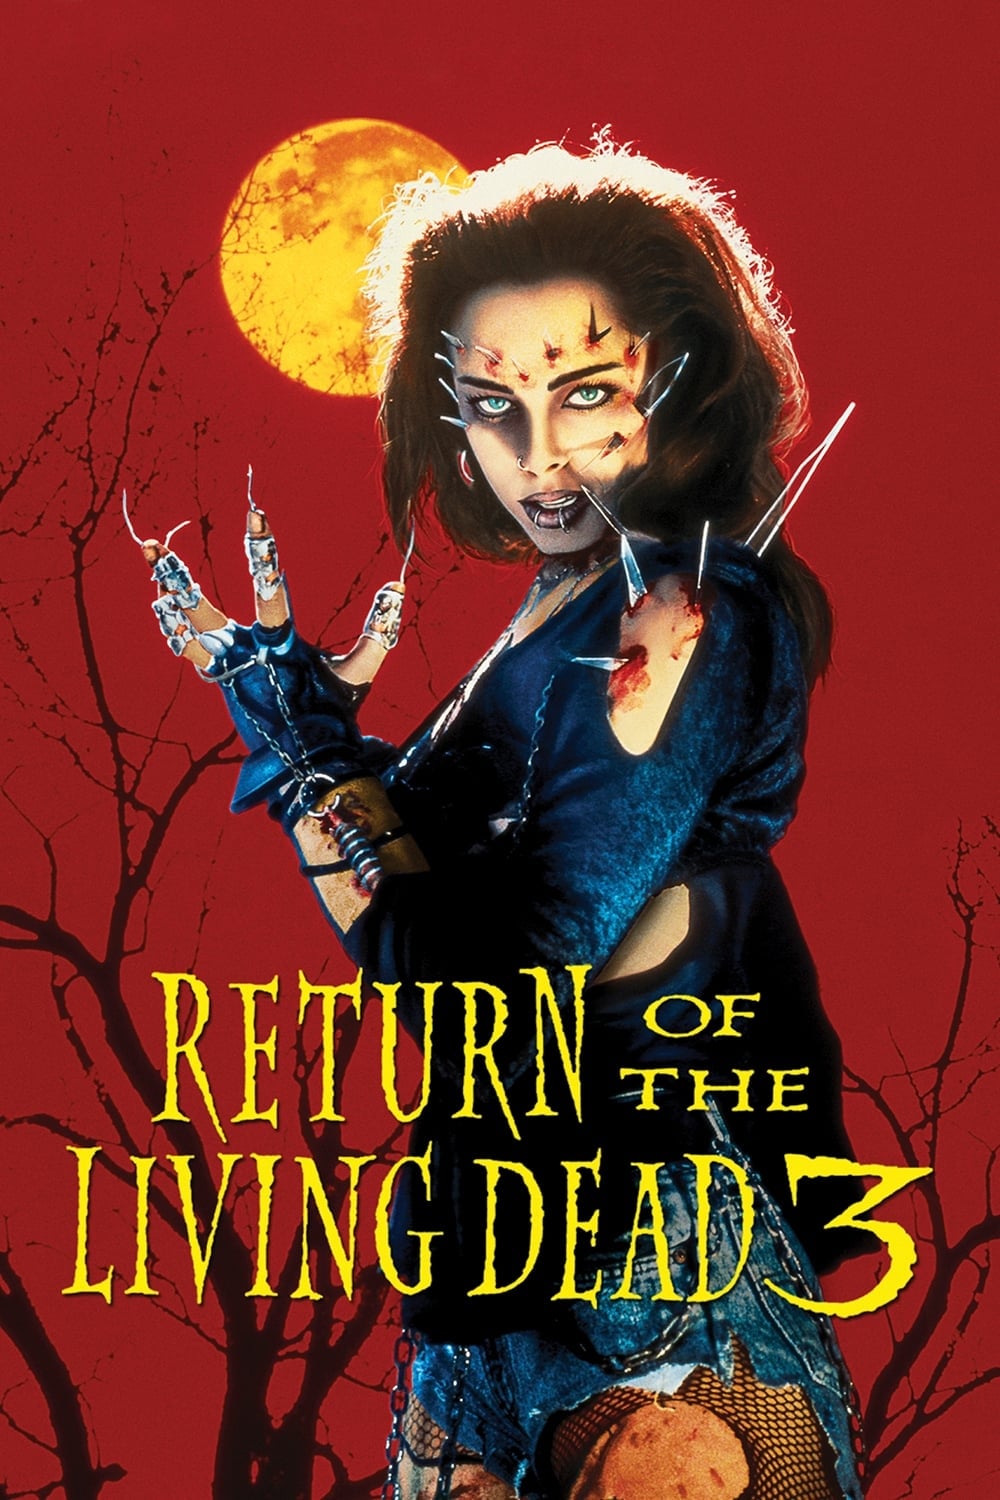 Mortal Zombie, Return of the Living Dead 3